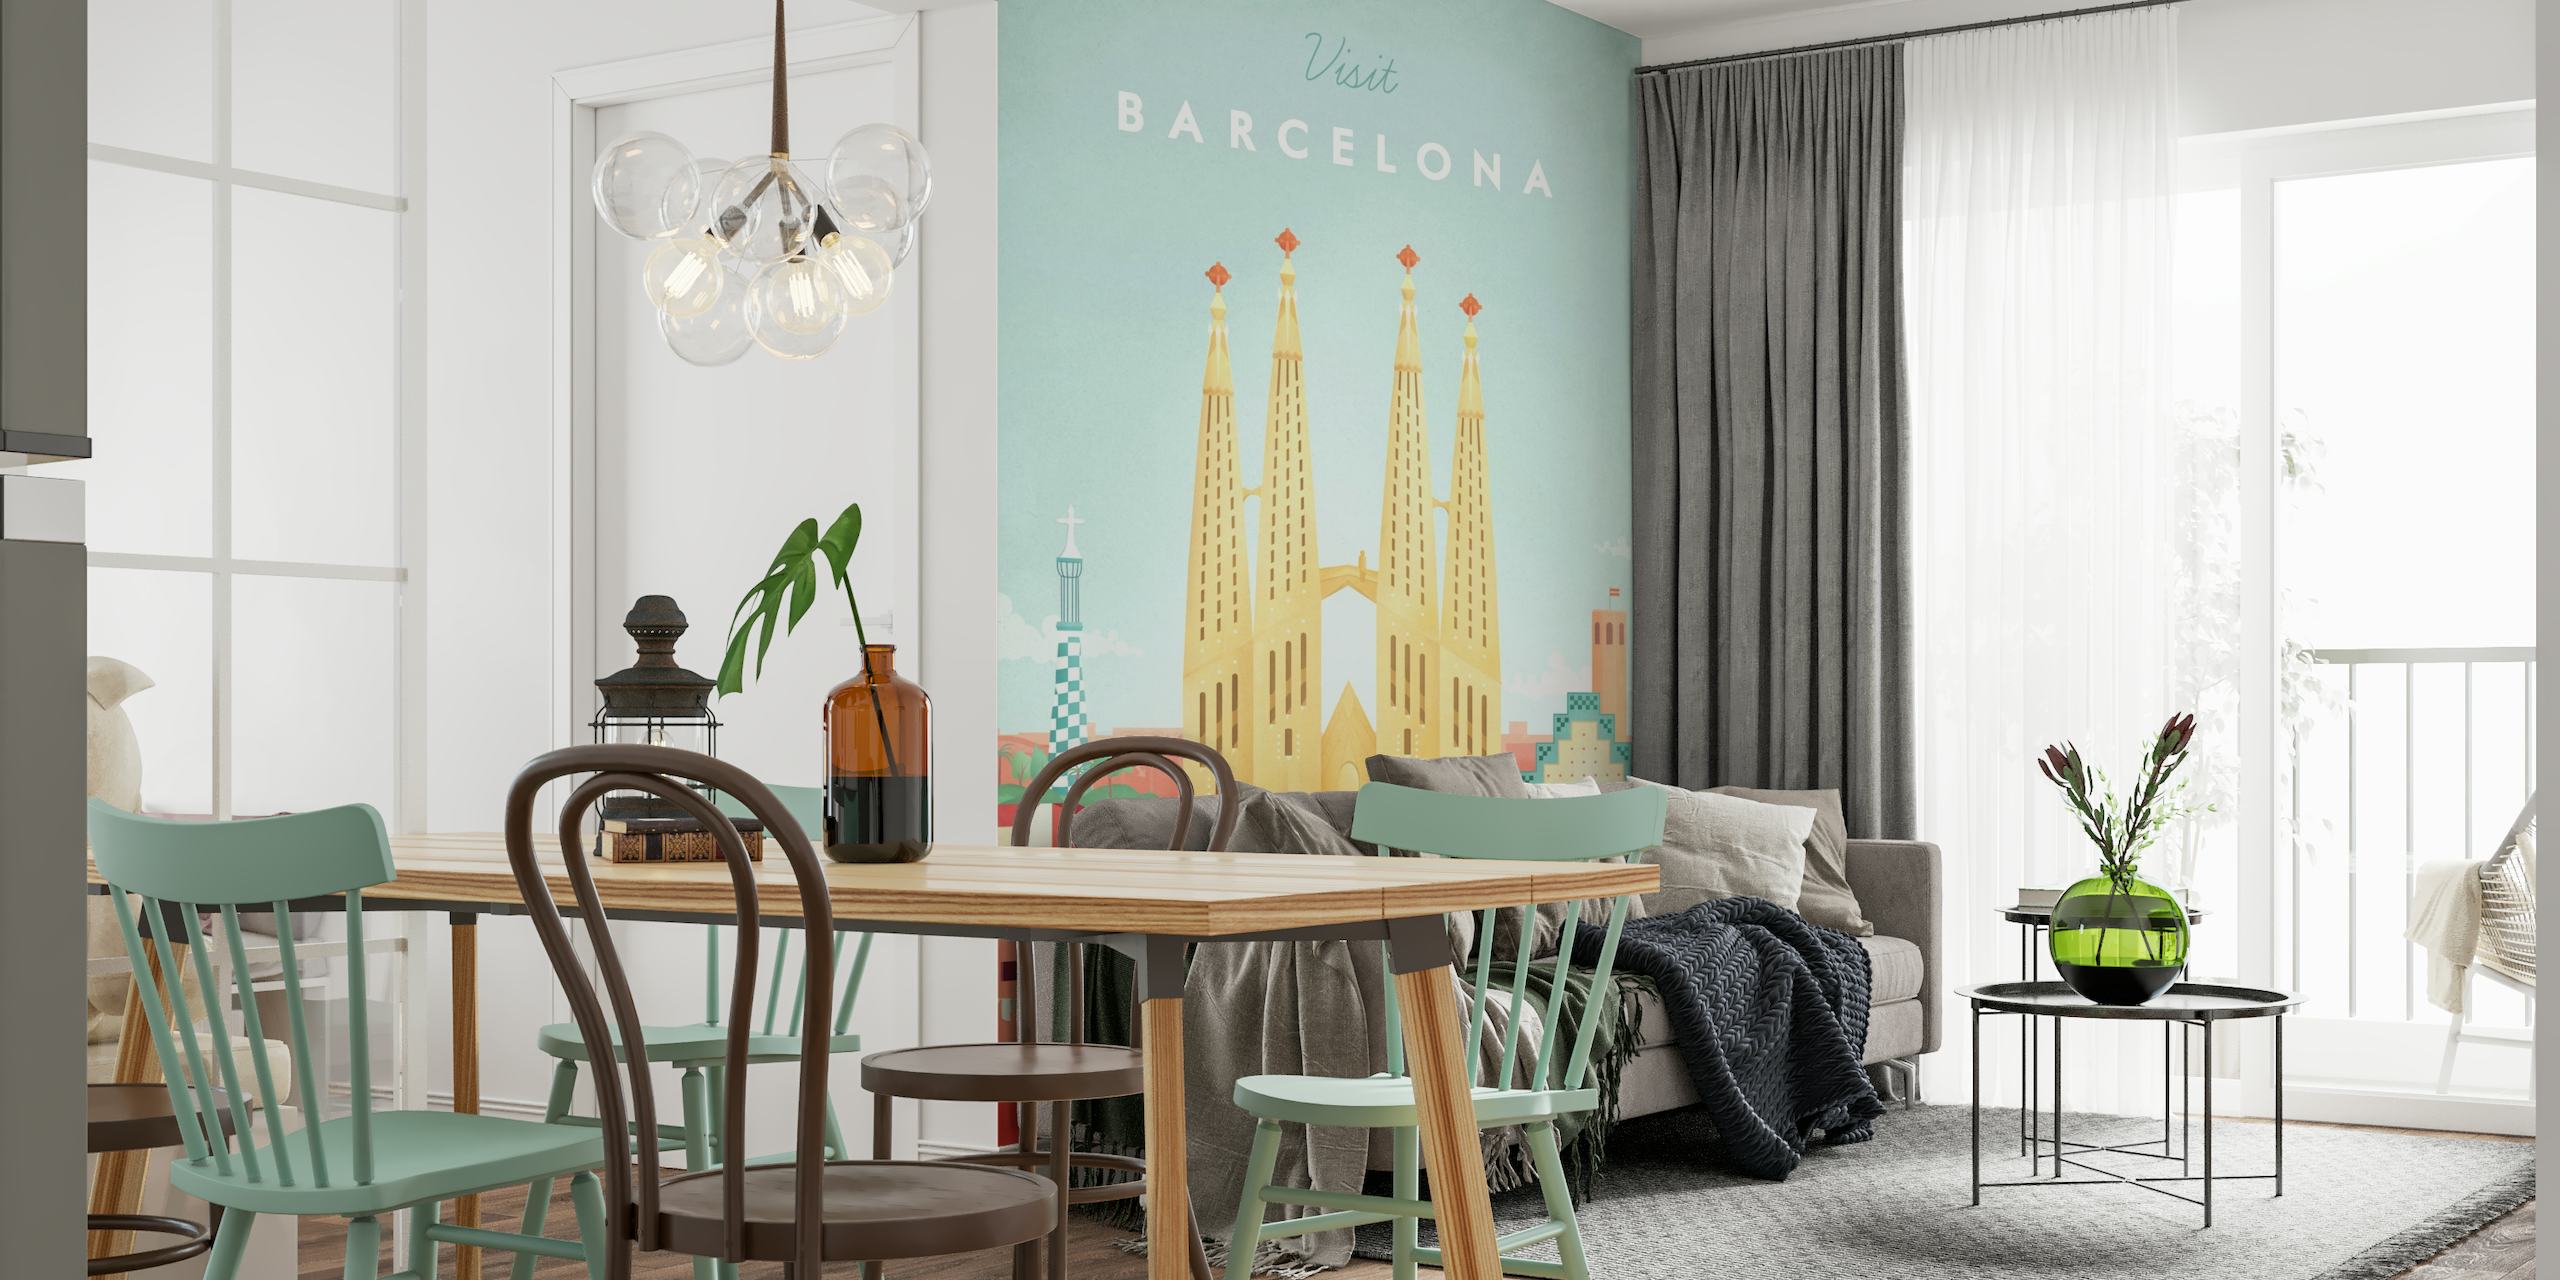 Barcelona Travel Poster behang